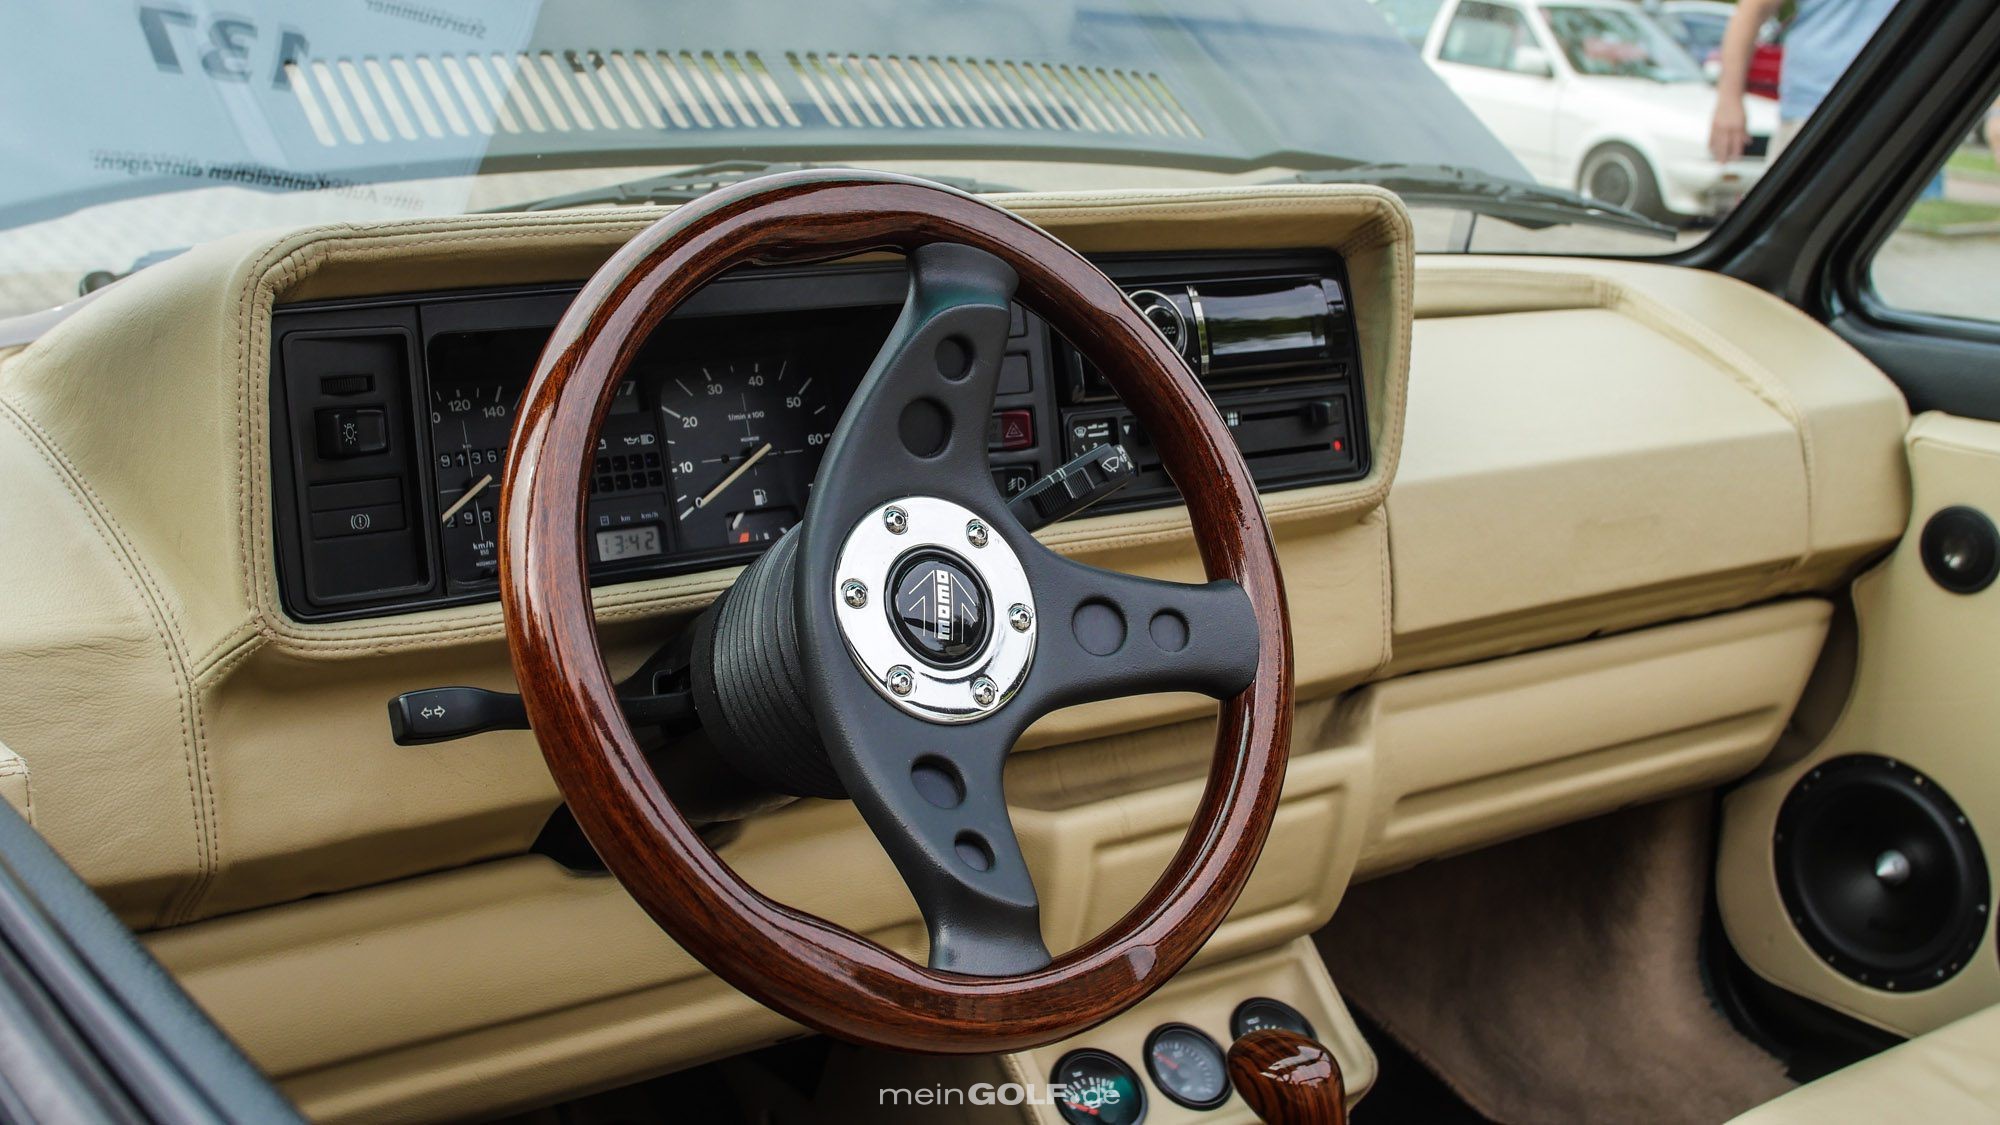 Stilvoll belederter Innenraum des VW Golf Cabrio